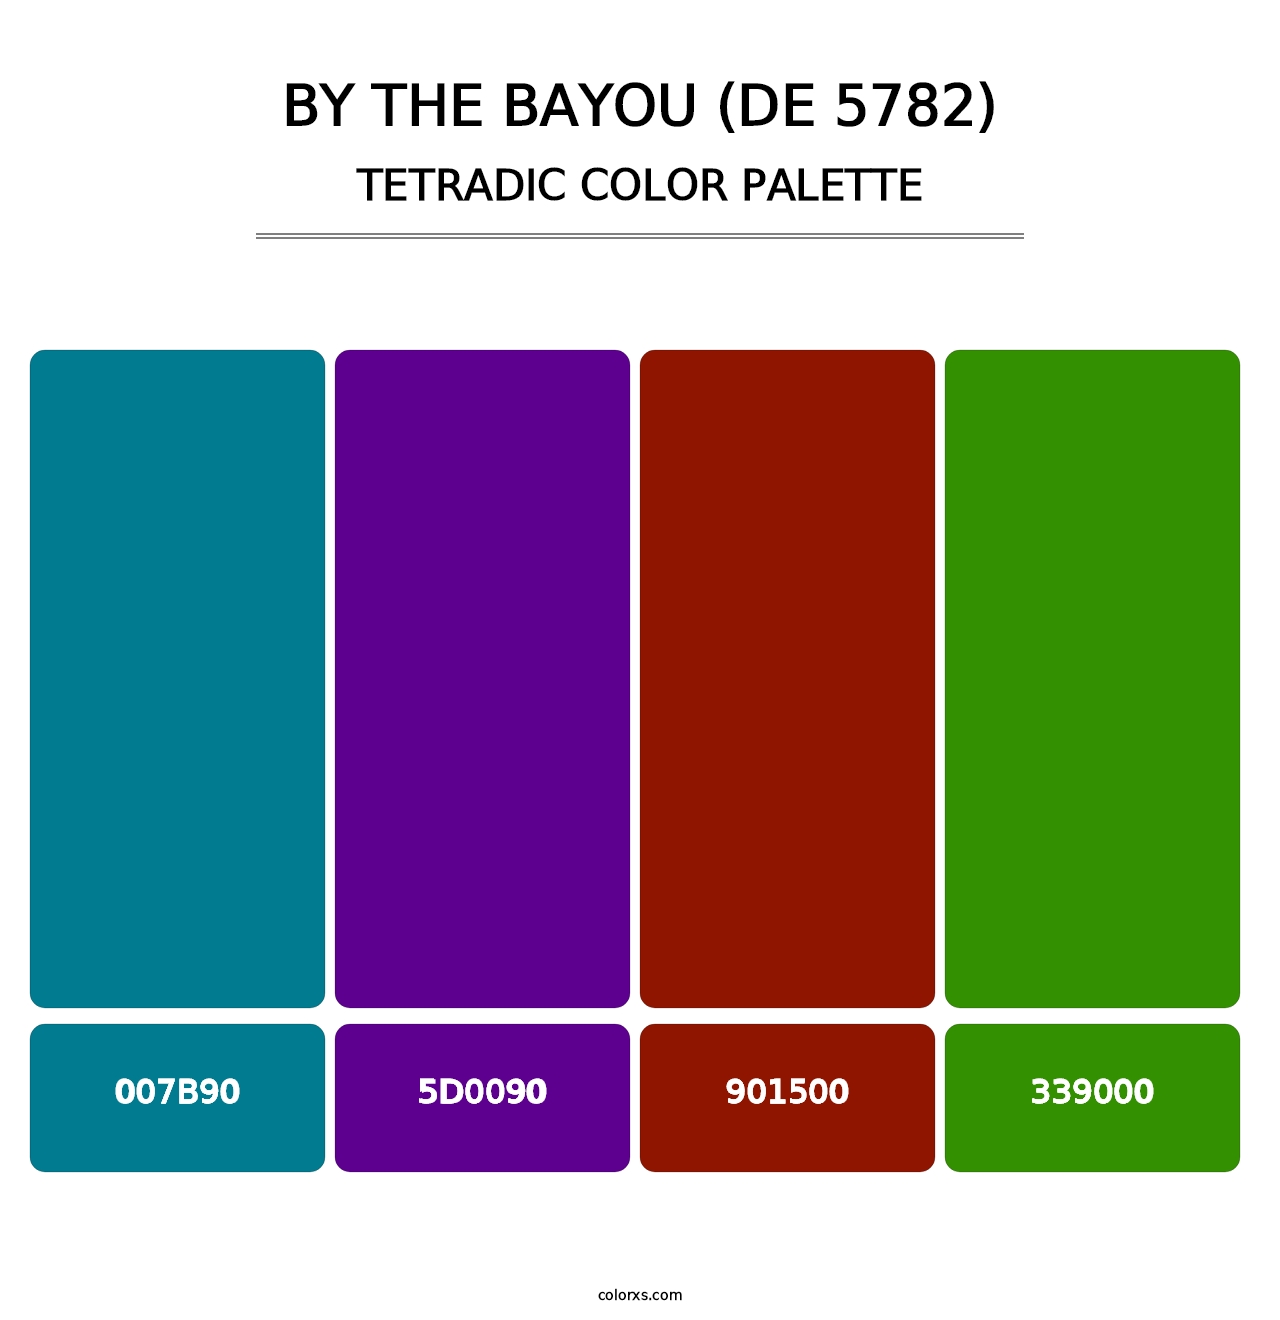 By the Bayou (DE 5782) - Tetradic Color Palette